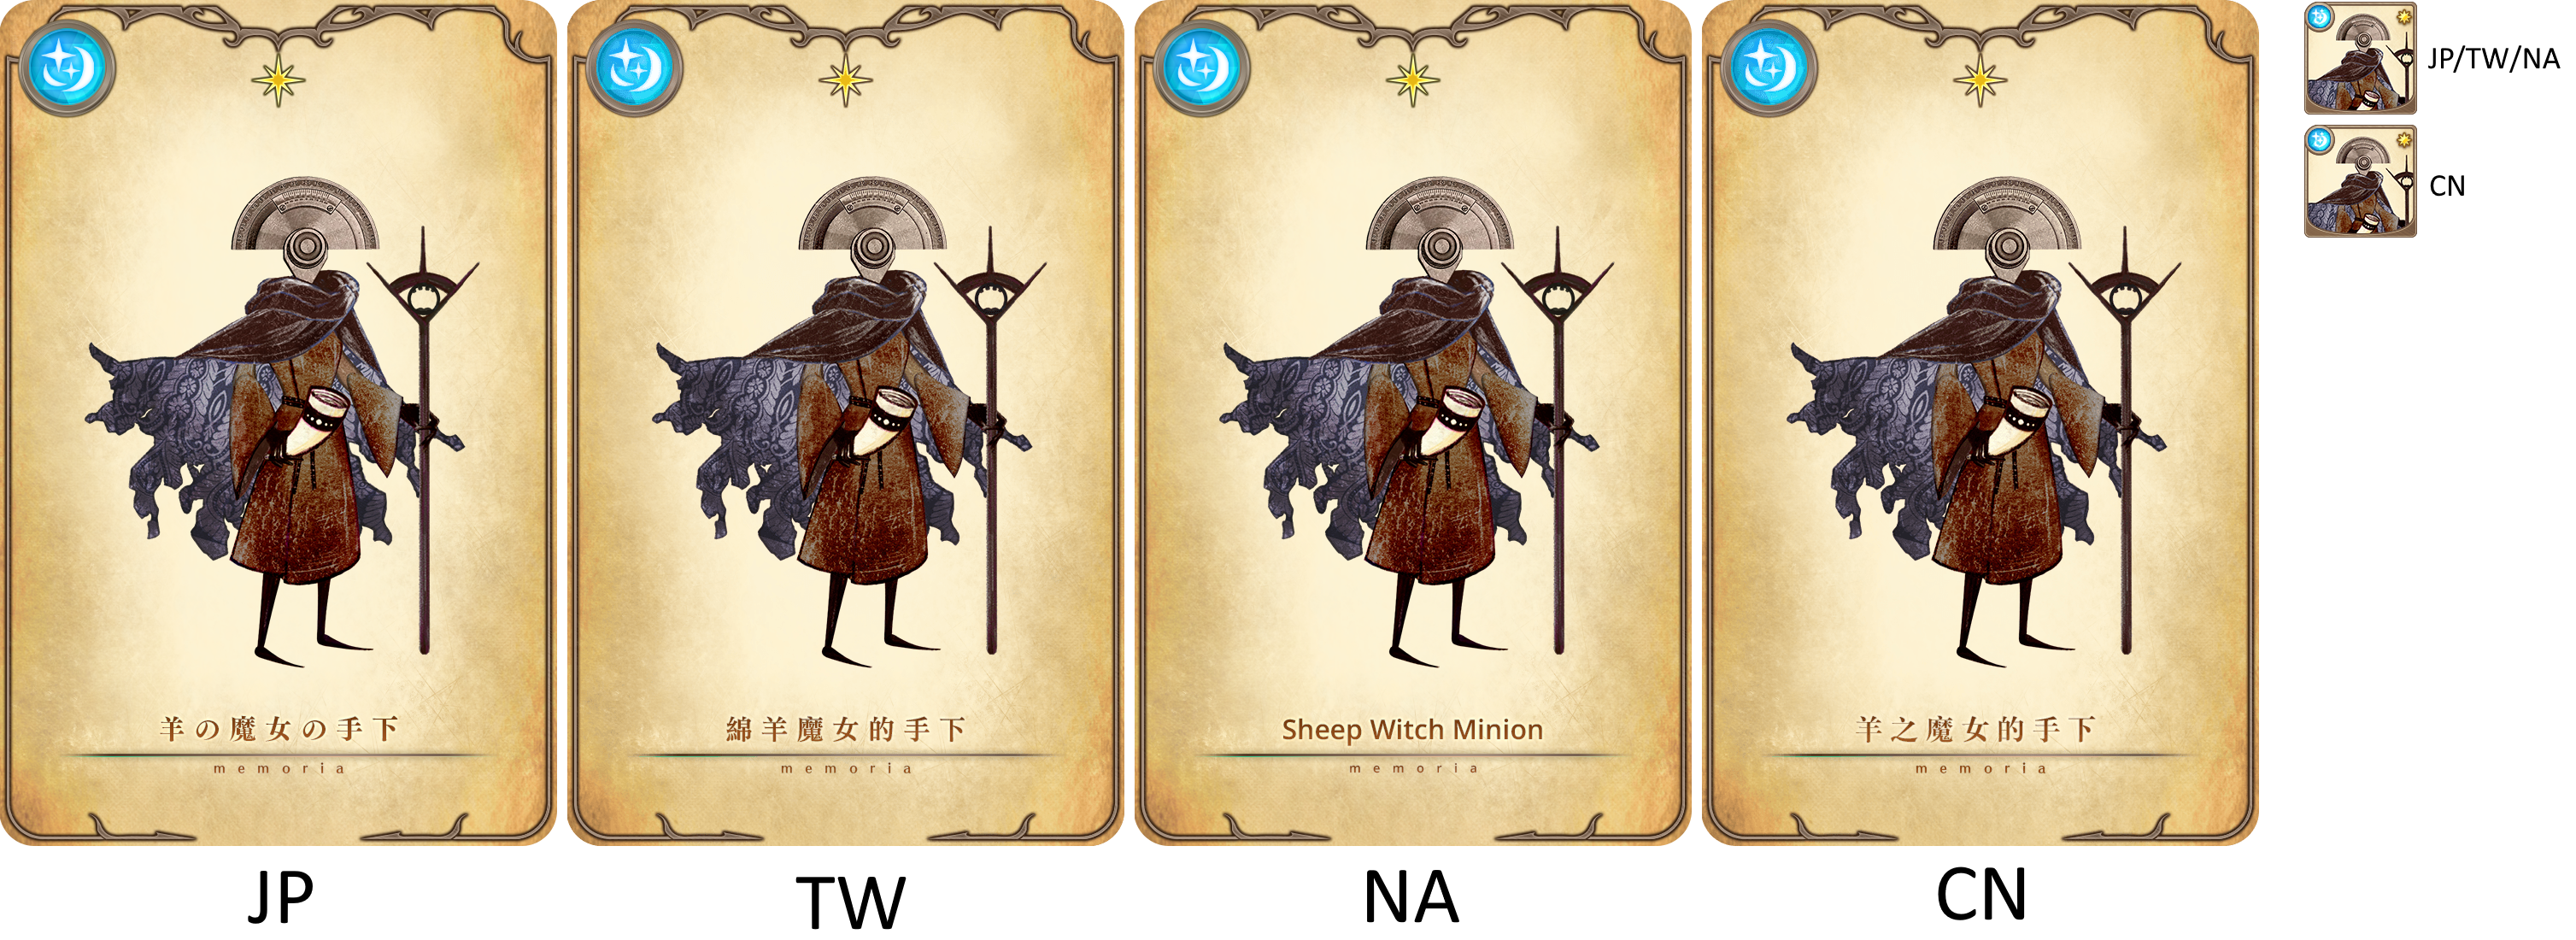 Puella Magi Madoka Magica Side Story: Magia Record - Minion of the Sheep Witch [memoria_1015]